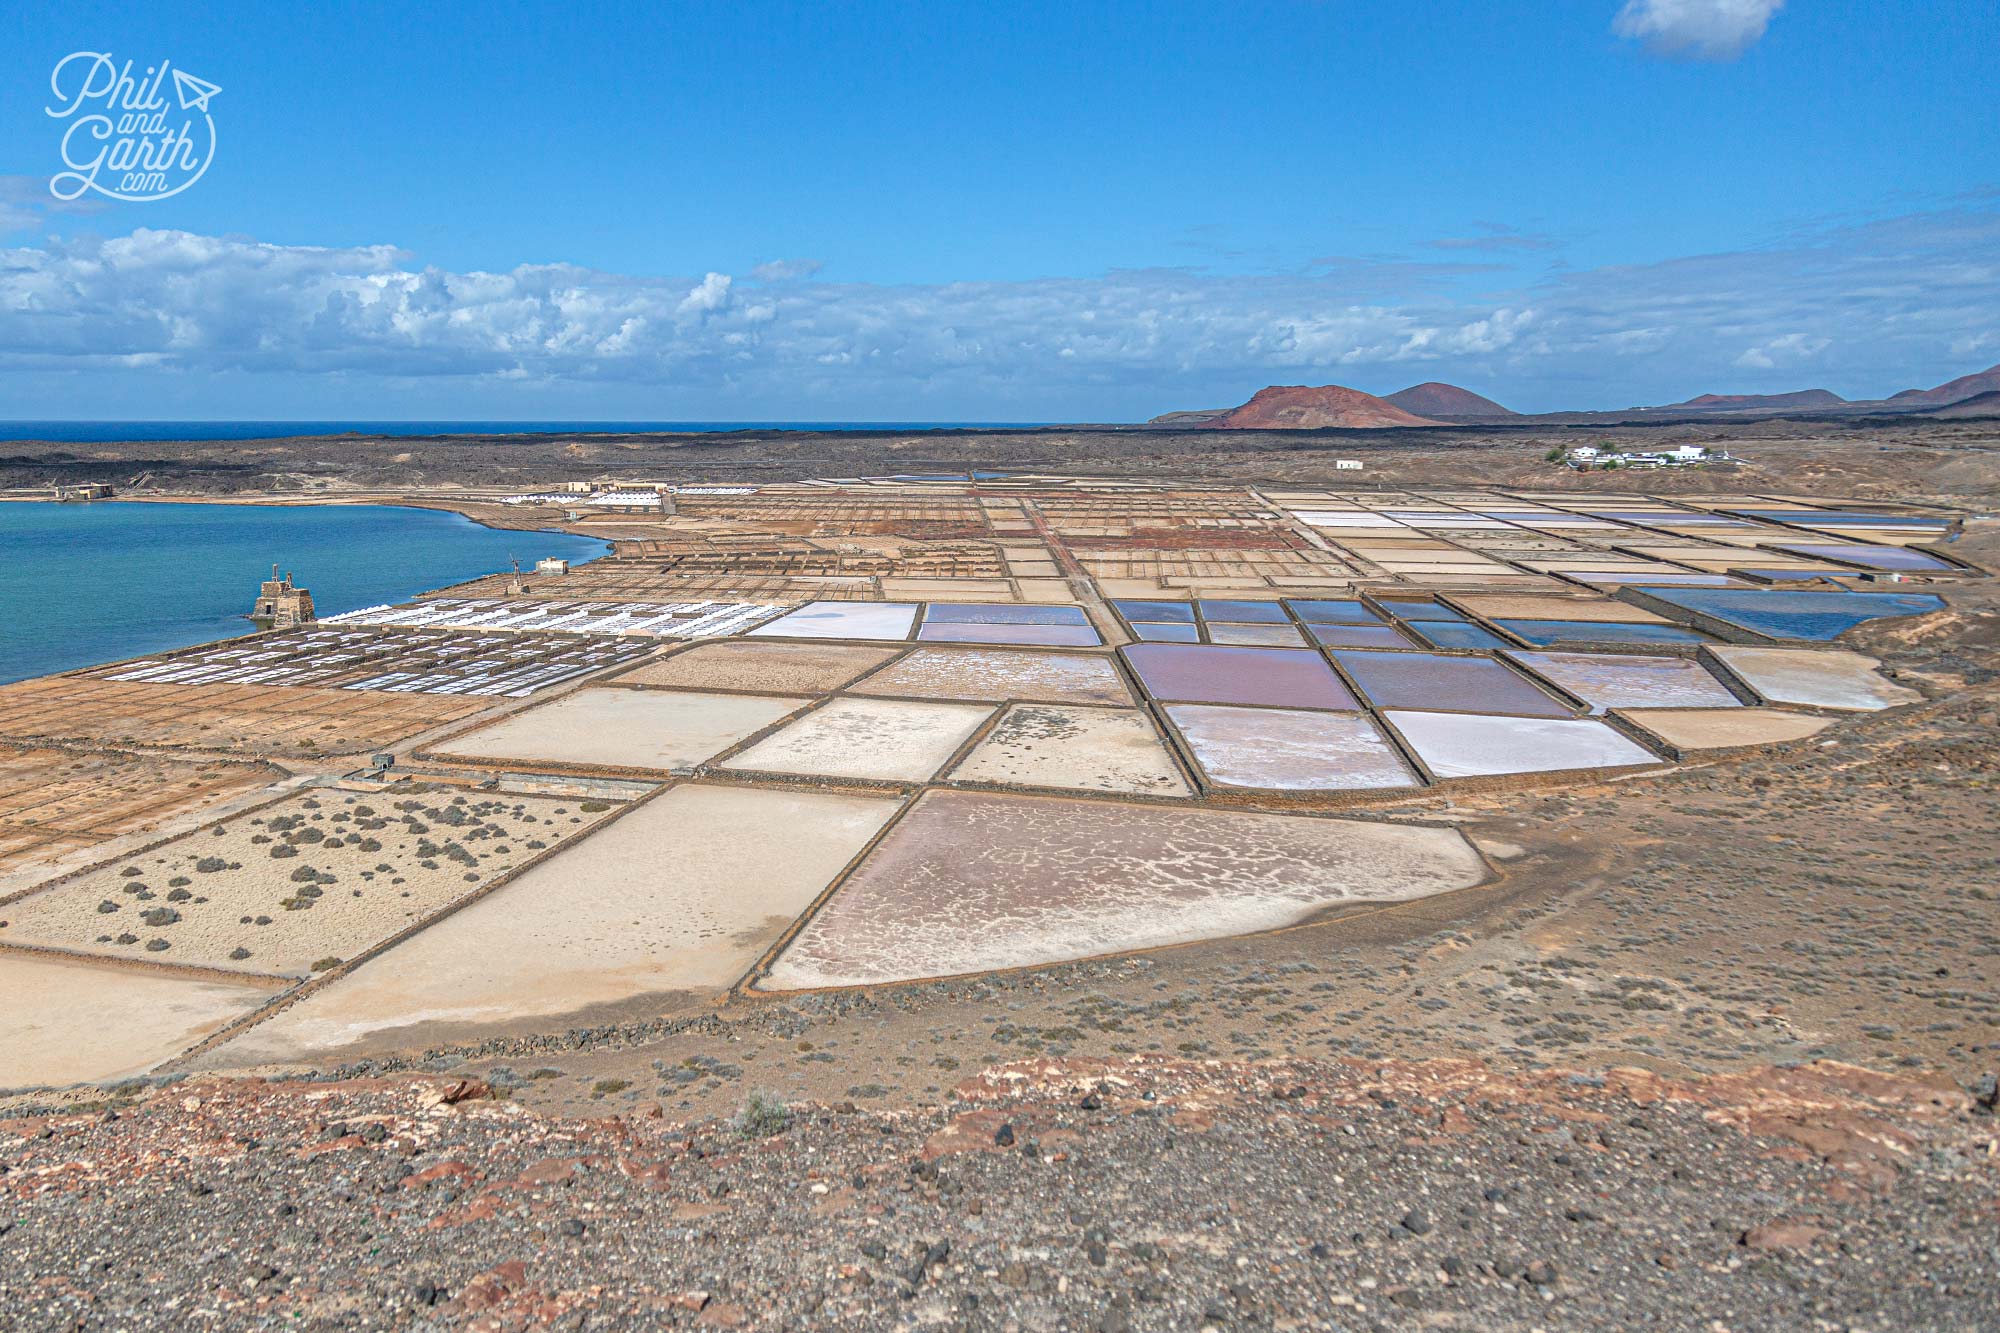 Lanzarote’s Janubio Salt Flats pastel hues look like a patchwork quilt